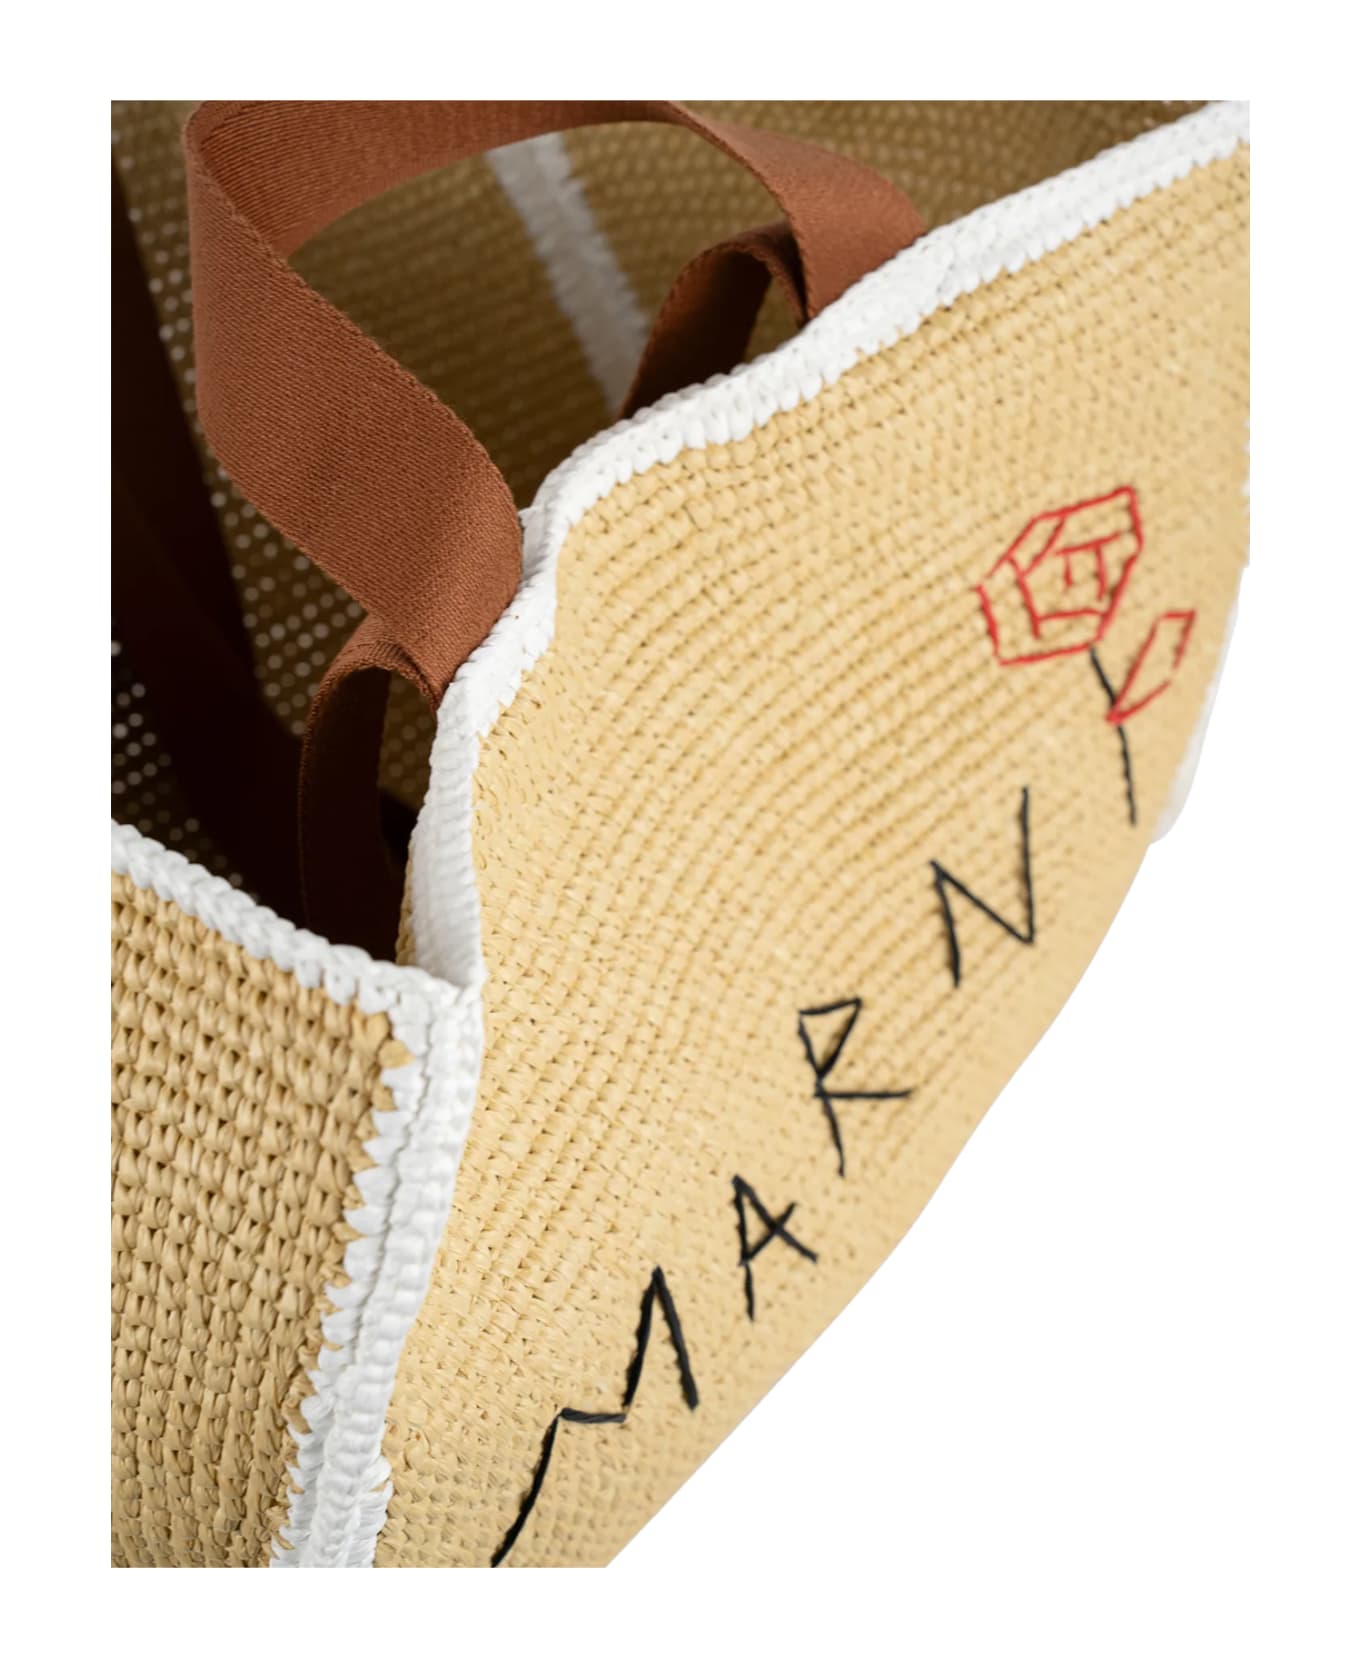 Marni Raffia Effect Macramé Knitted Sillo Shopping Bag - White